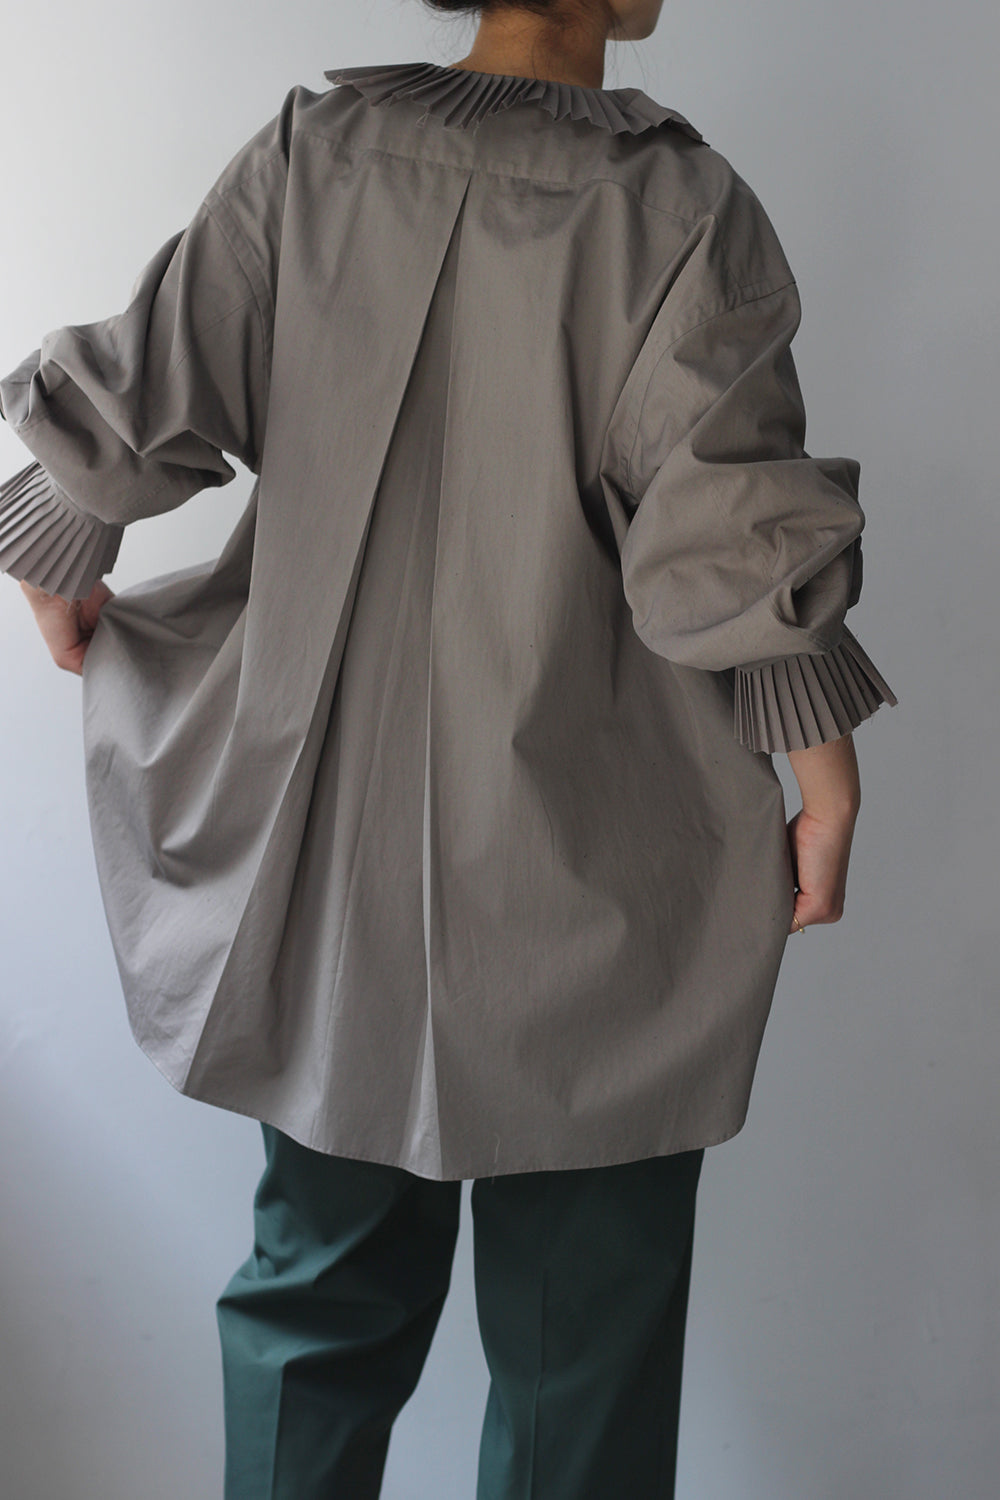 JUN MIKAMI "pleats collar shirt" (gray)